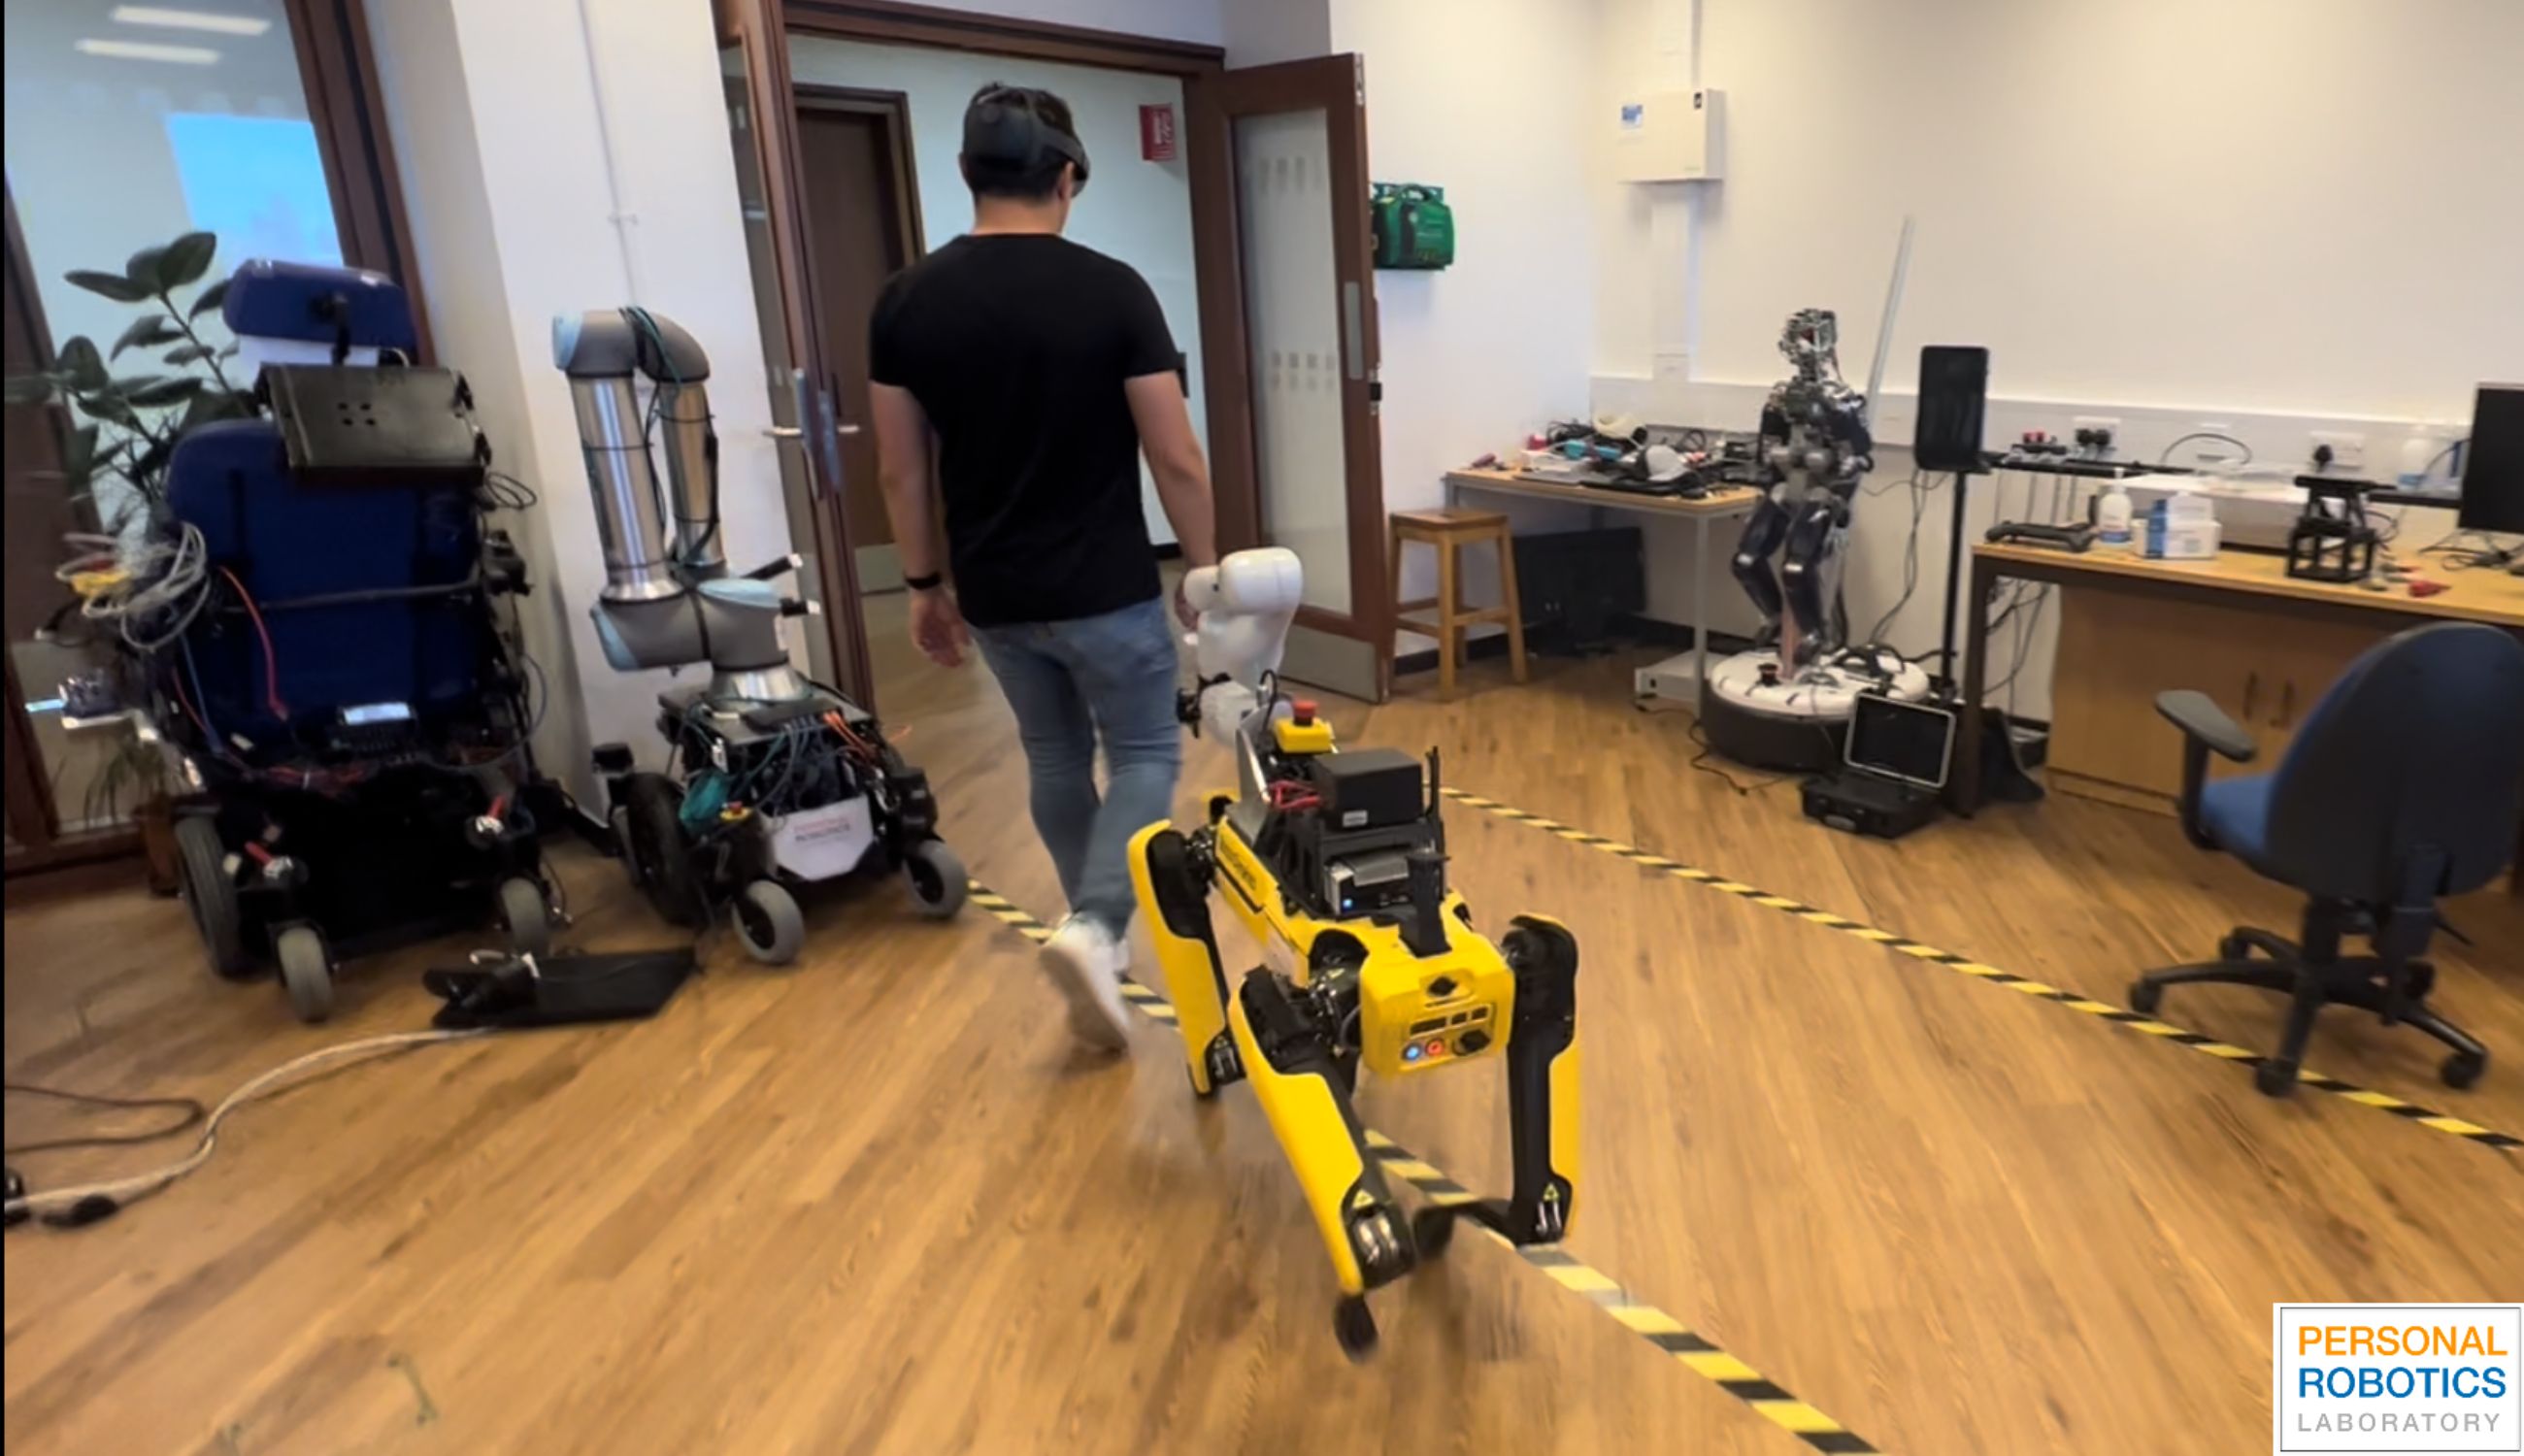 Personal Robotics Laboratory Follow Holo-SpoK indoors